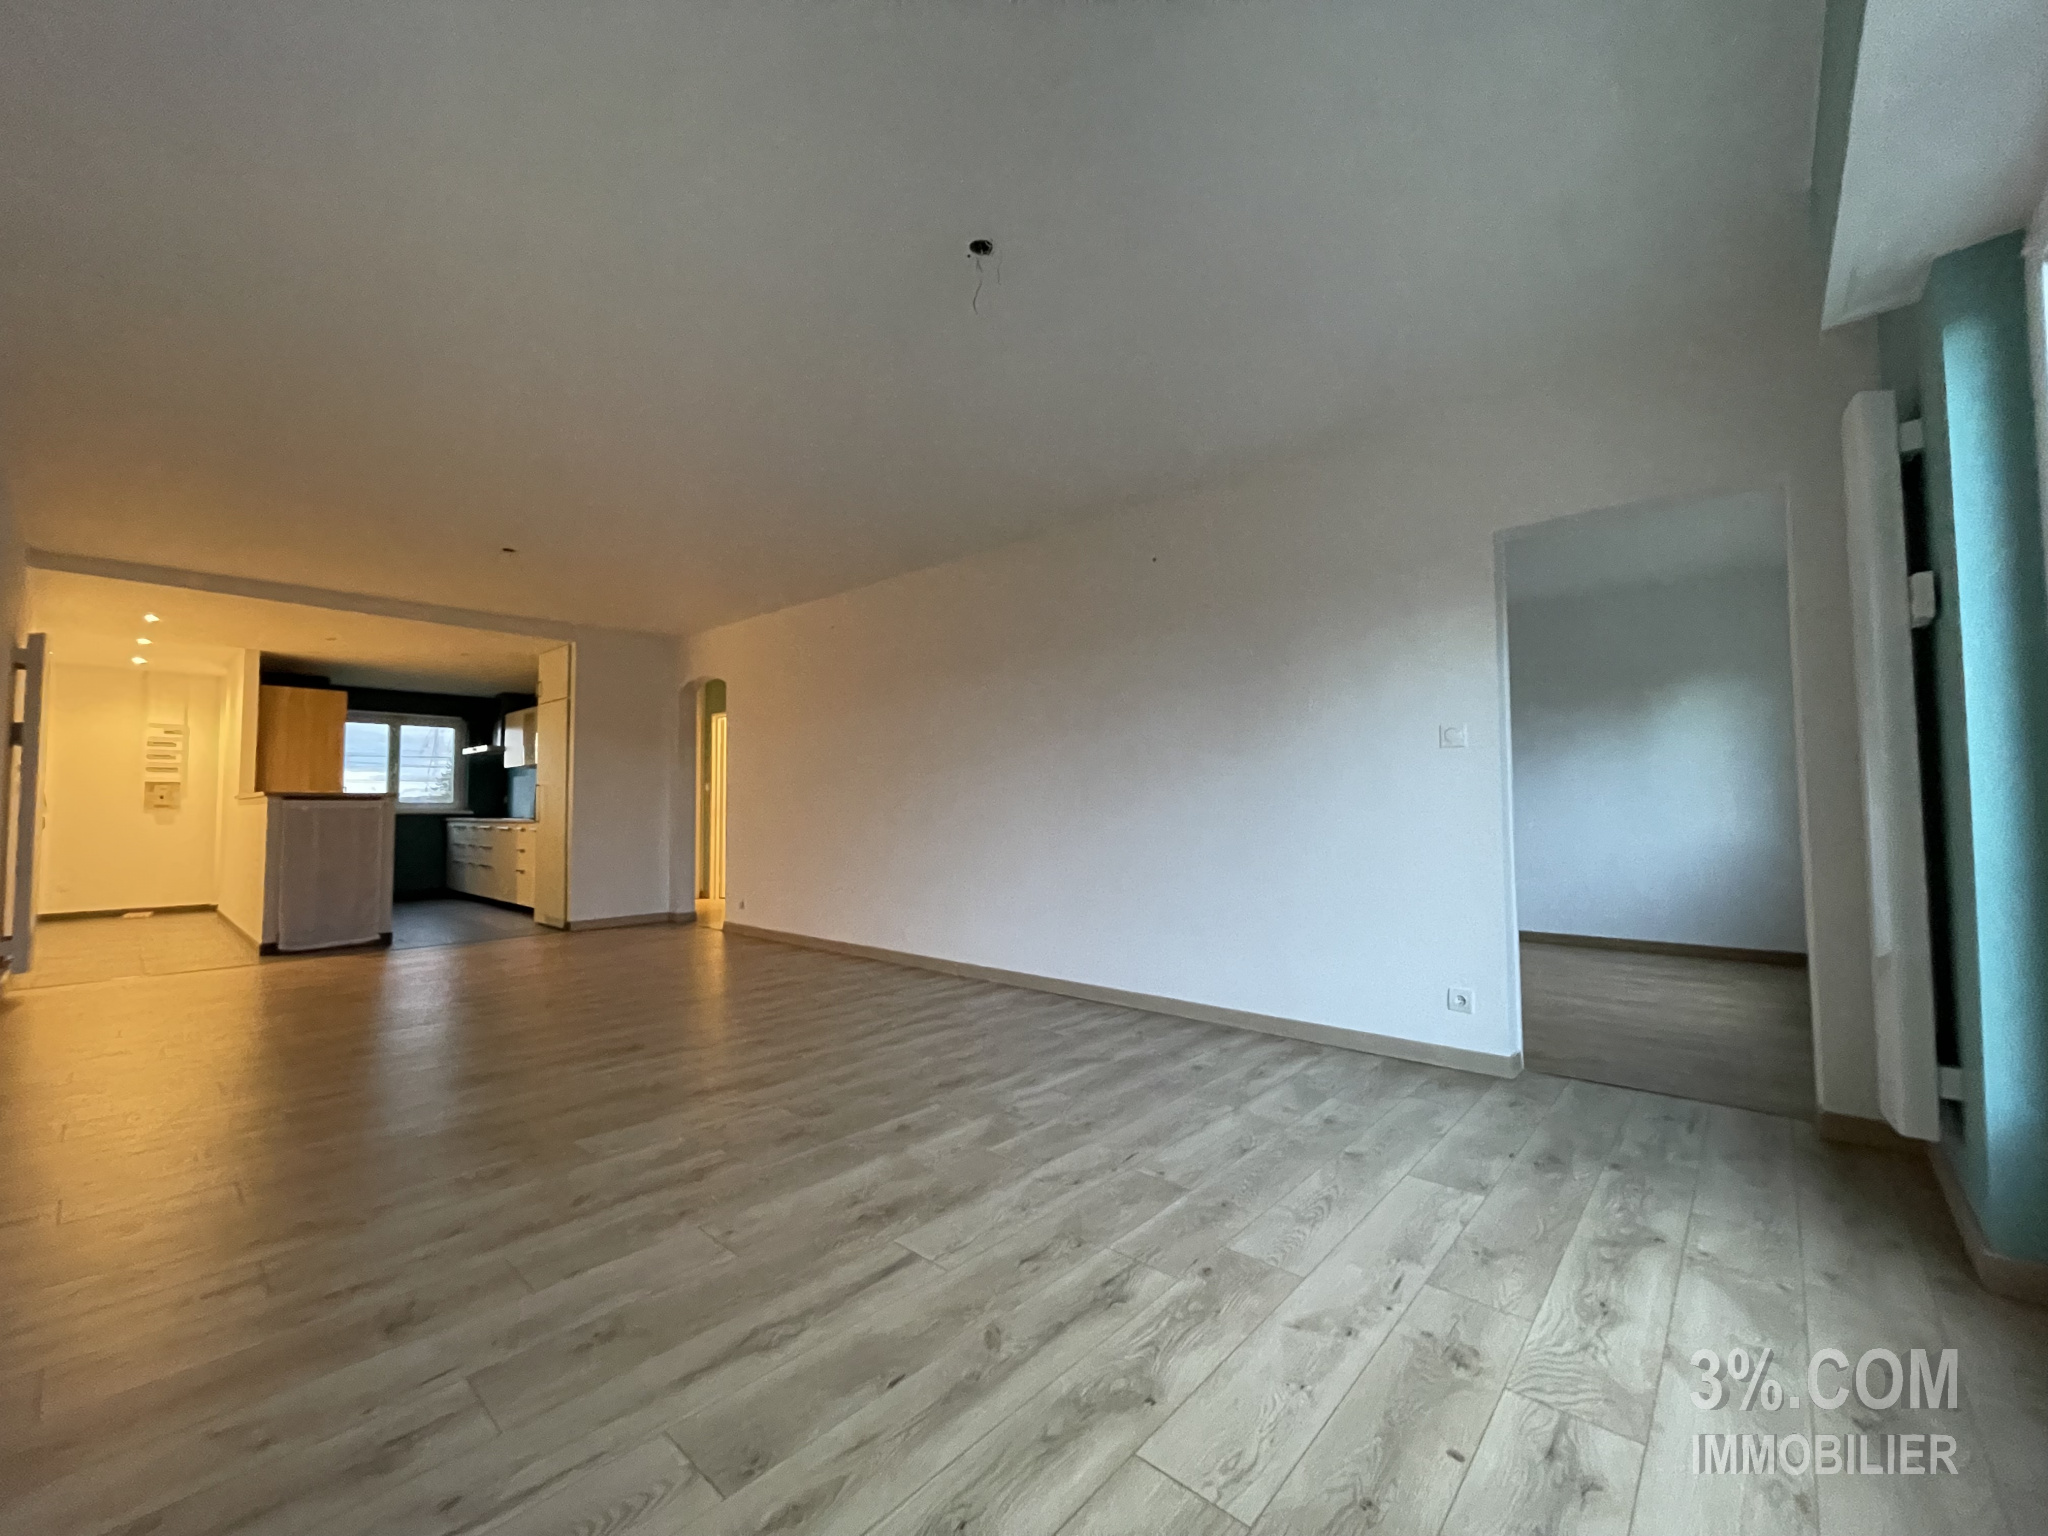 Vente Appartement 86m² 4 Pièces à Lipsheim (67640) - 3%.Com